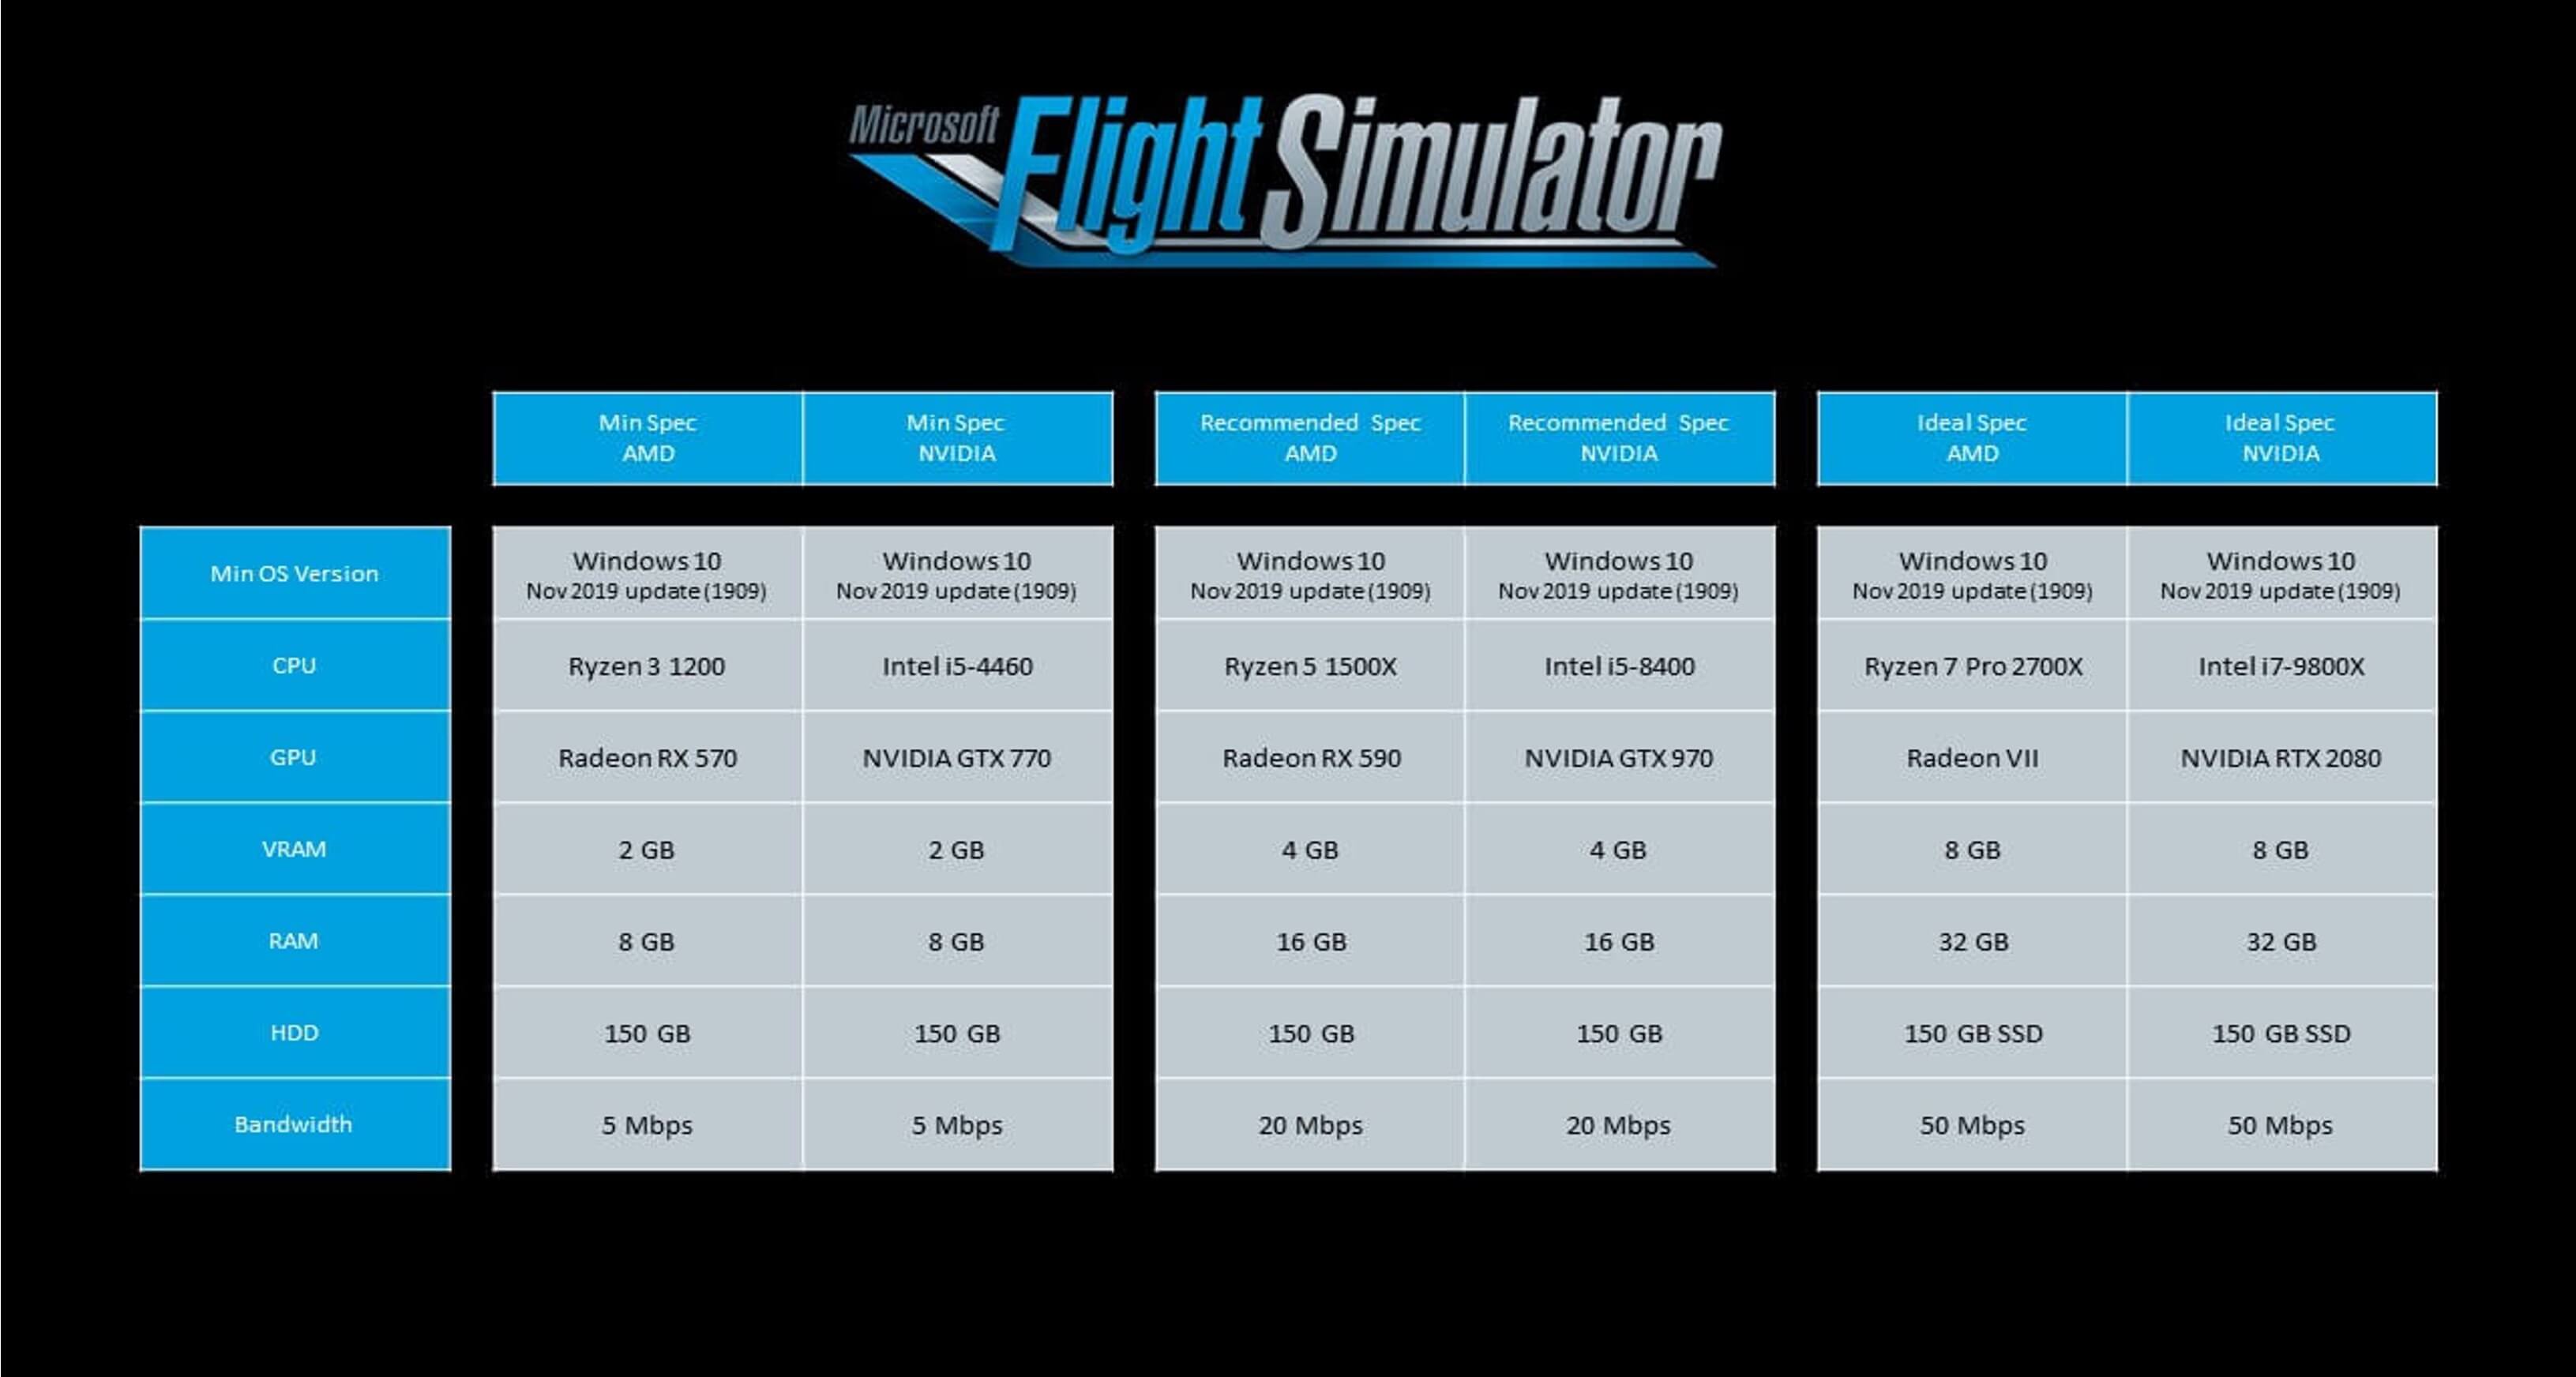 Microsoft Flight Simulator 2020 specs